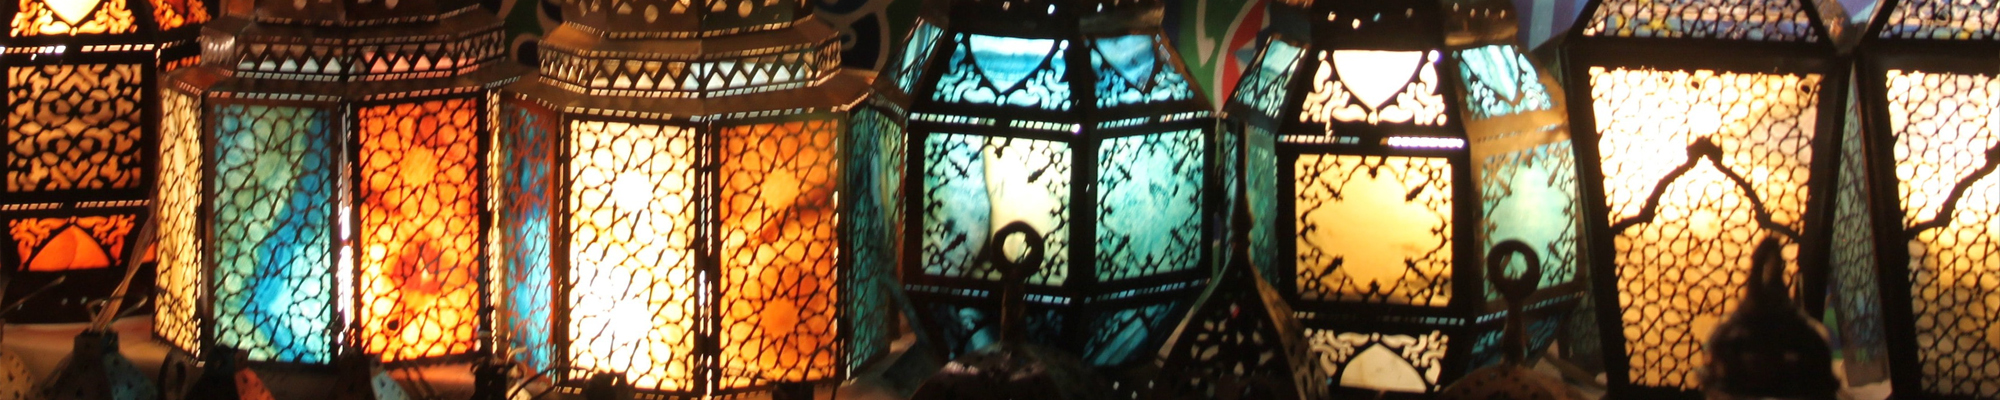 up close of lanterns